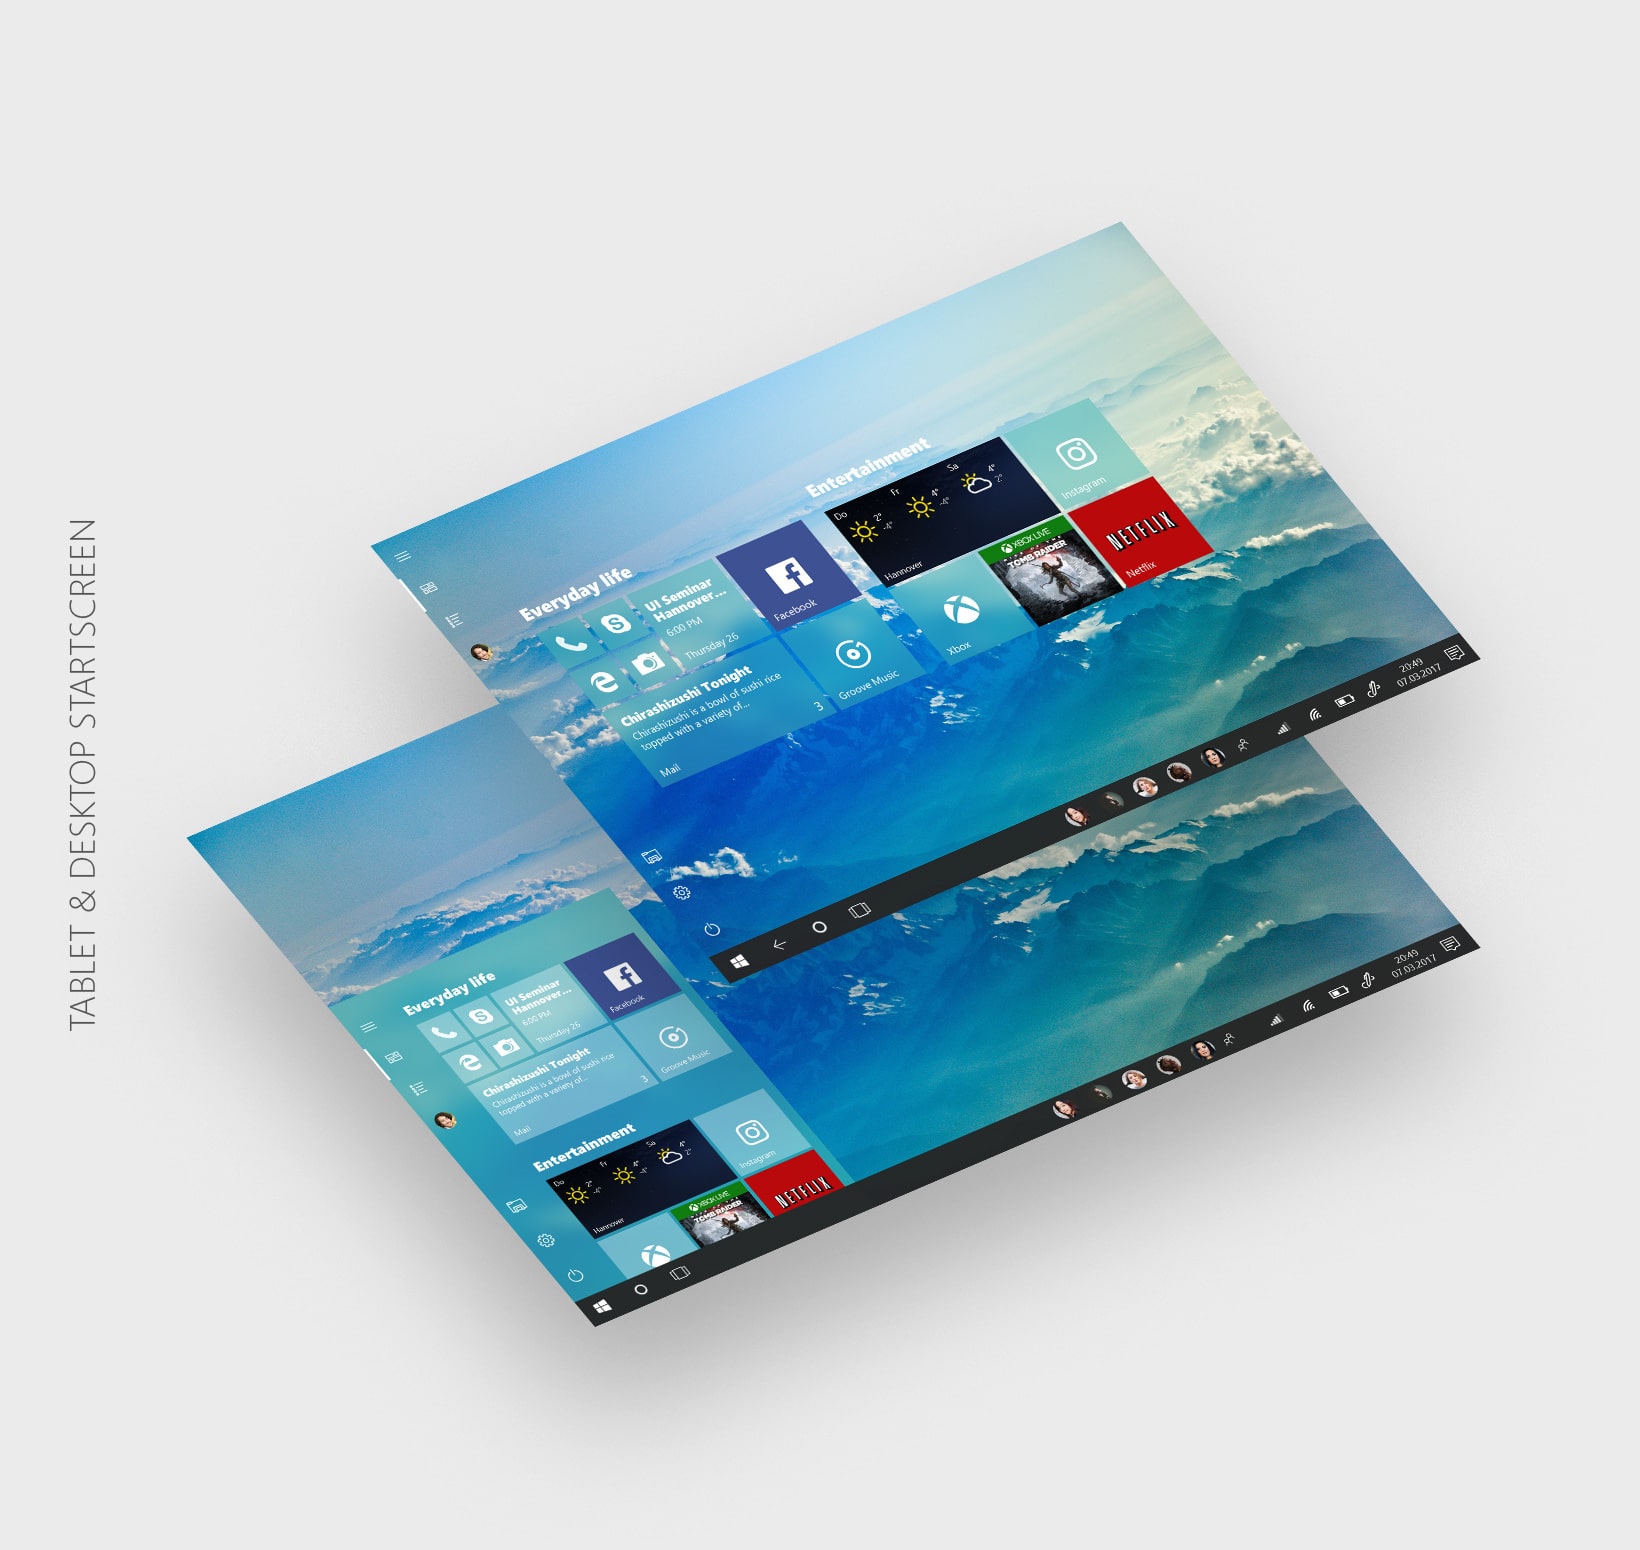 Windows 10 Porject Neon Design Konzept